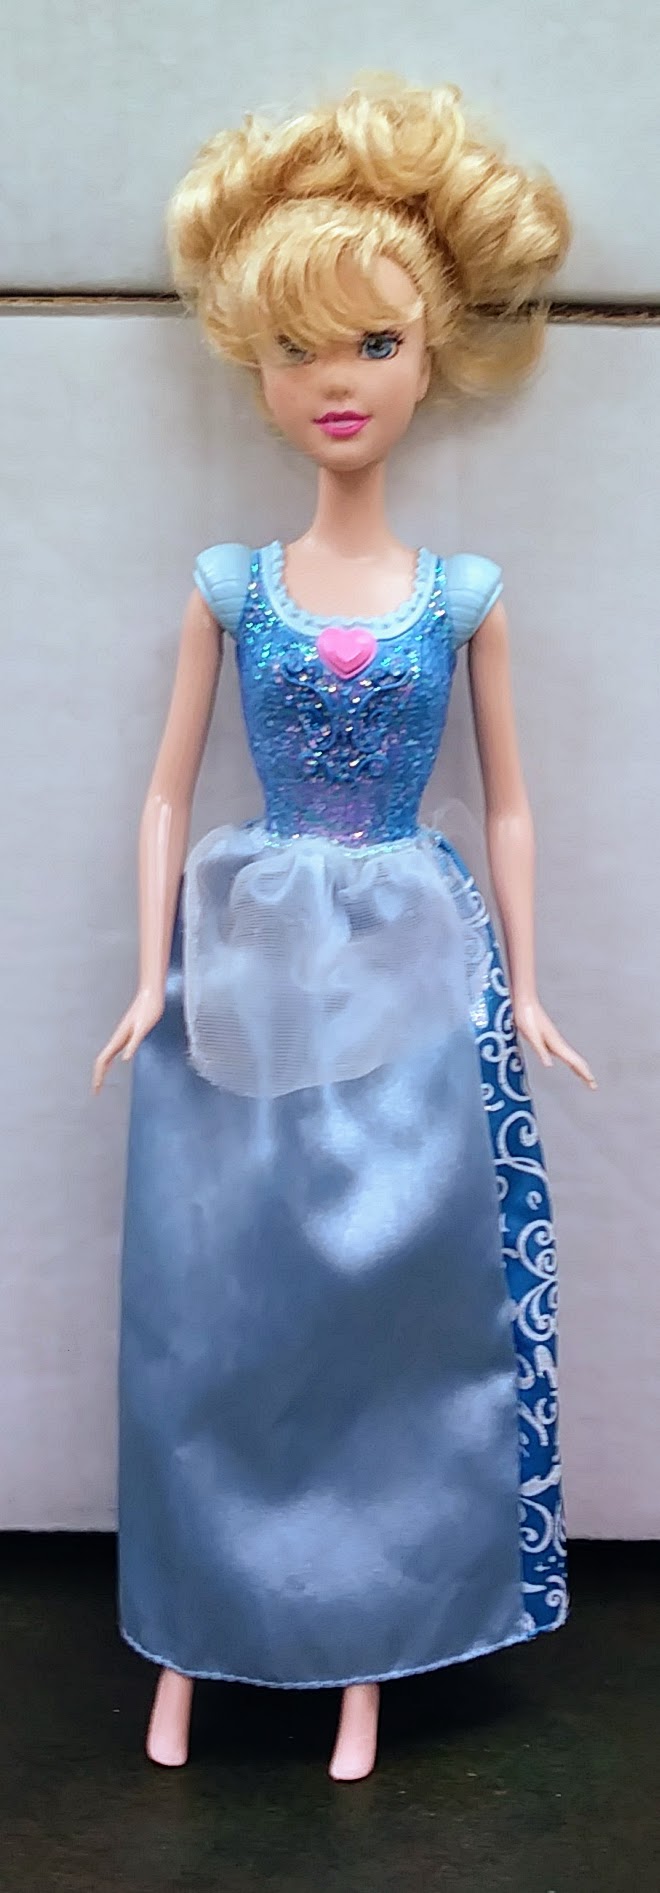 Barbie Doll - Sparkling Princess Cinderella (Loose)